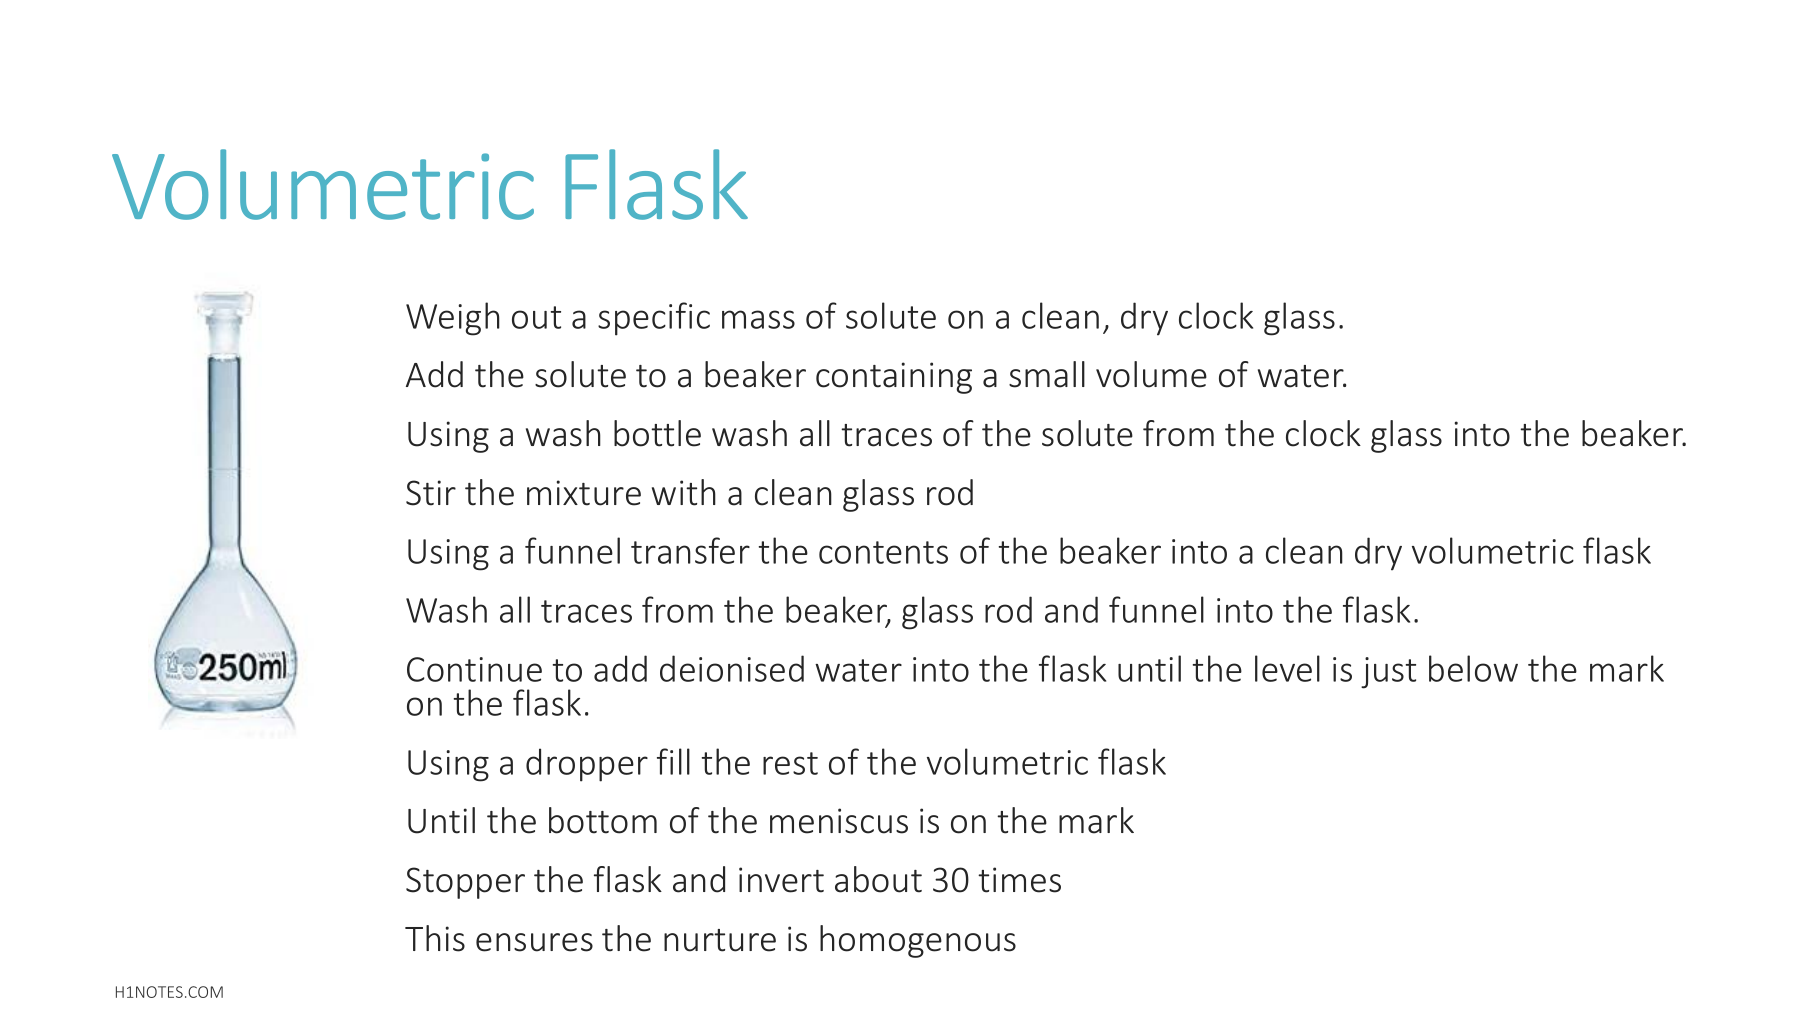 Chemistry Notes - Volumetric Flask